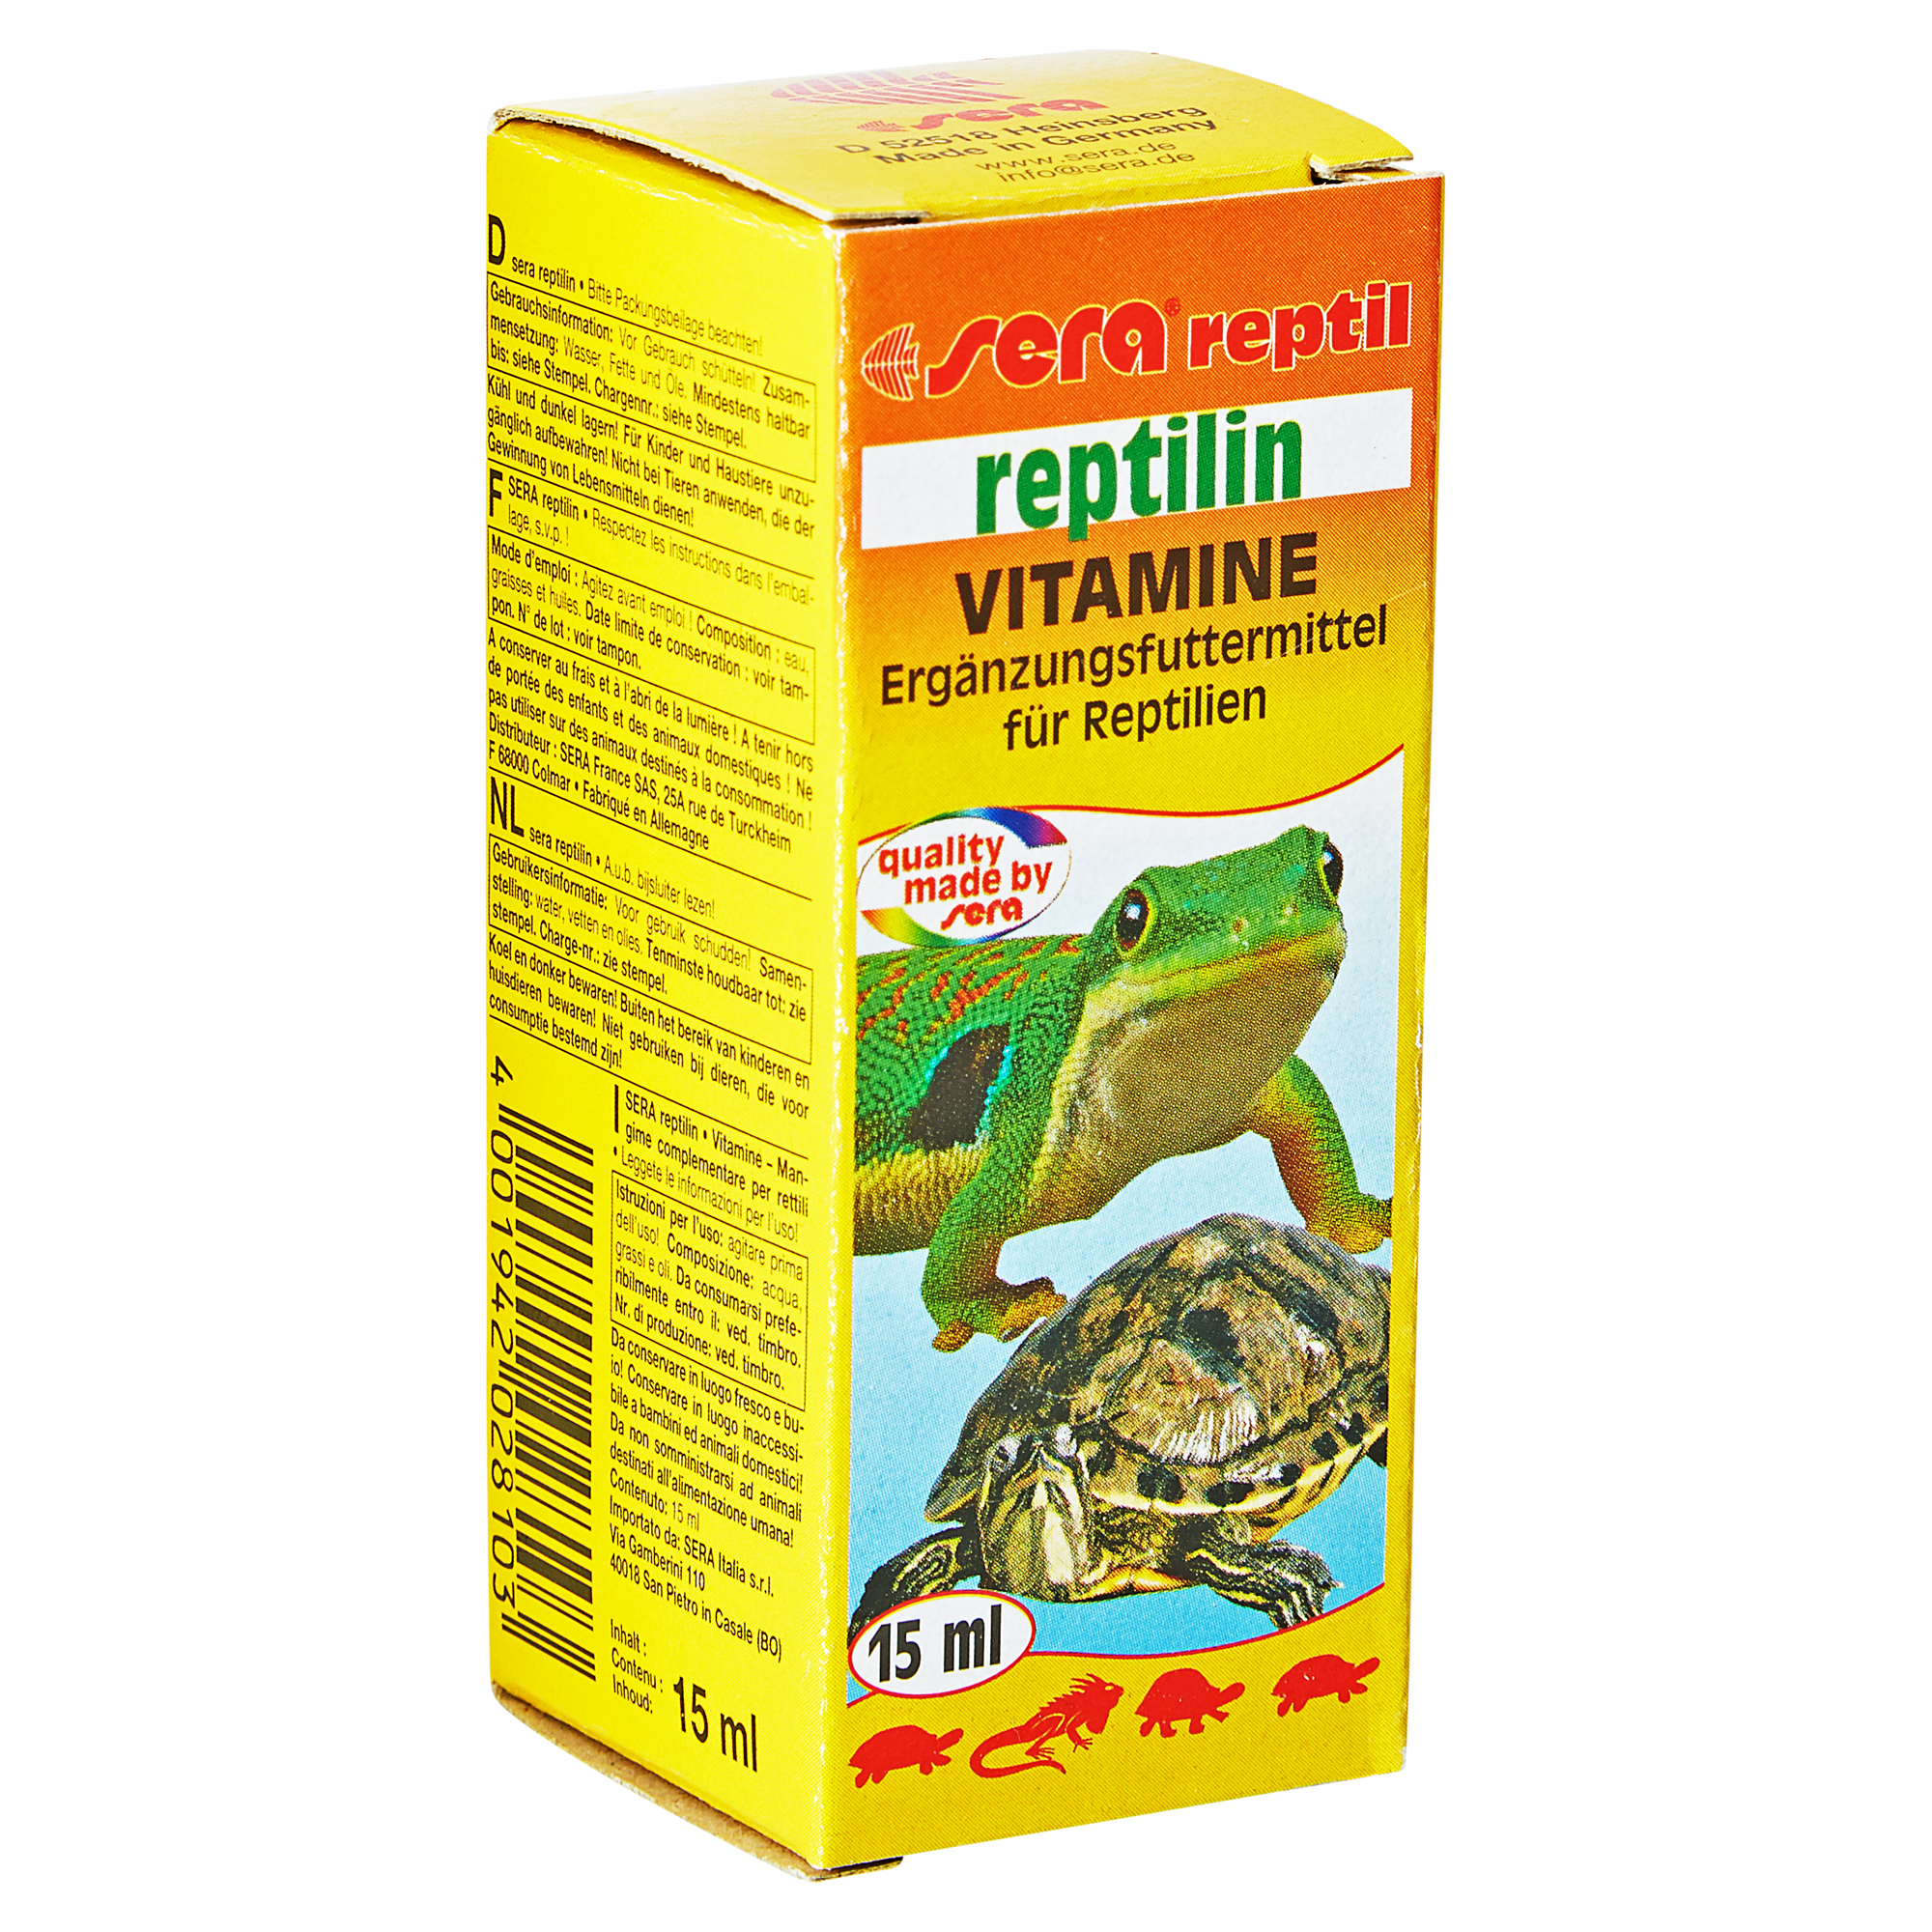 Ergänzungsfuttermittel "Reptil" Reptilin 15 ml + product picture